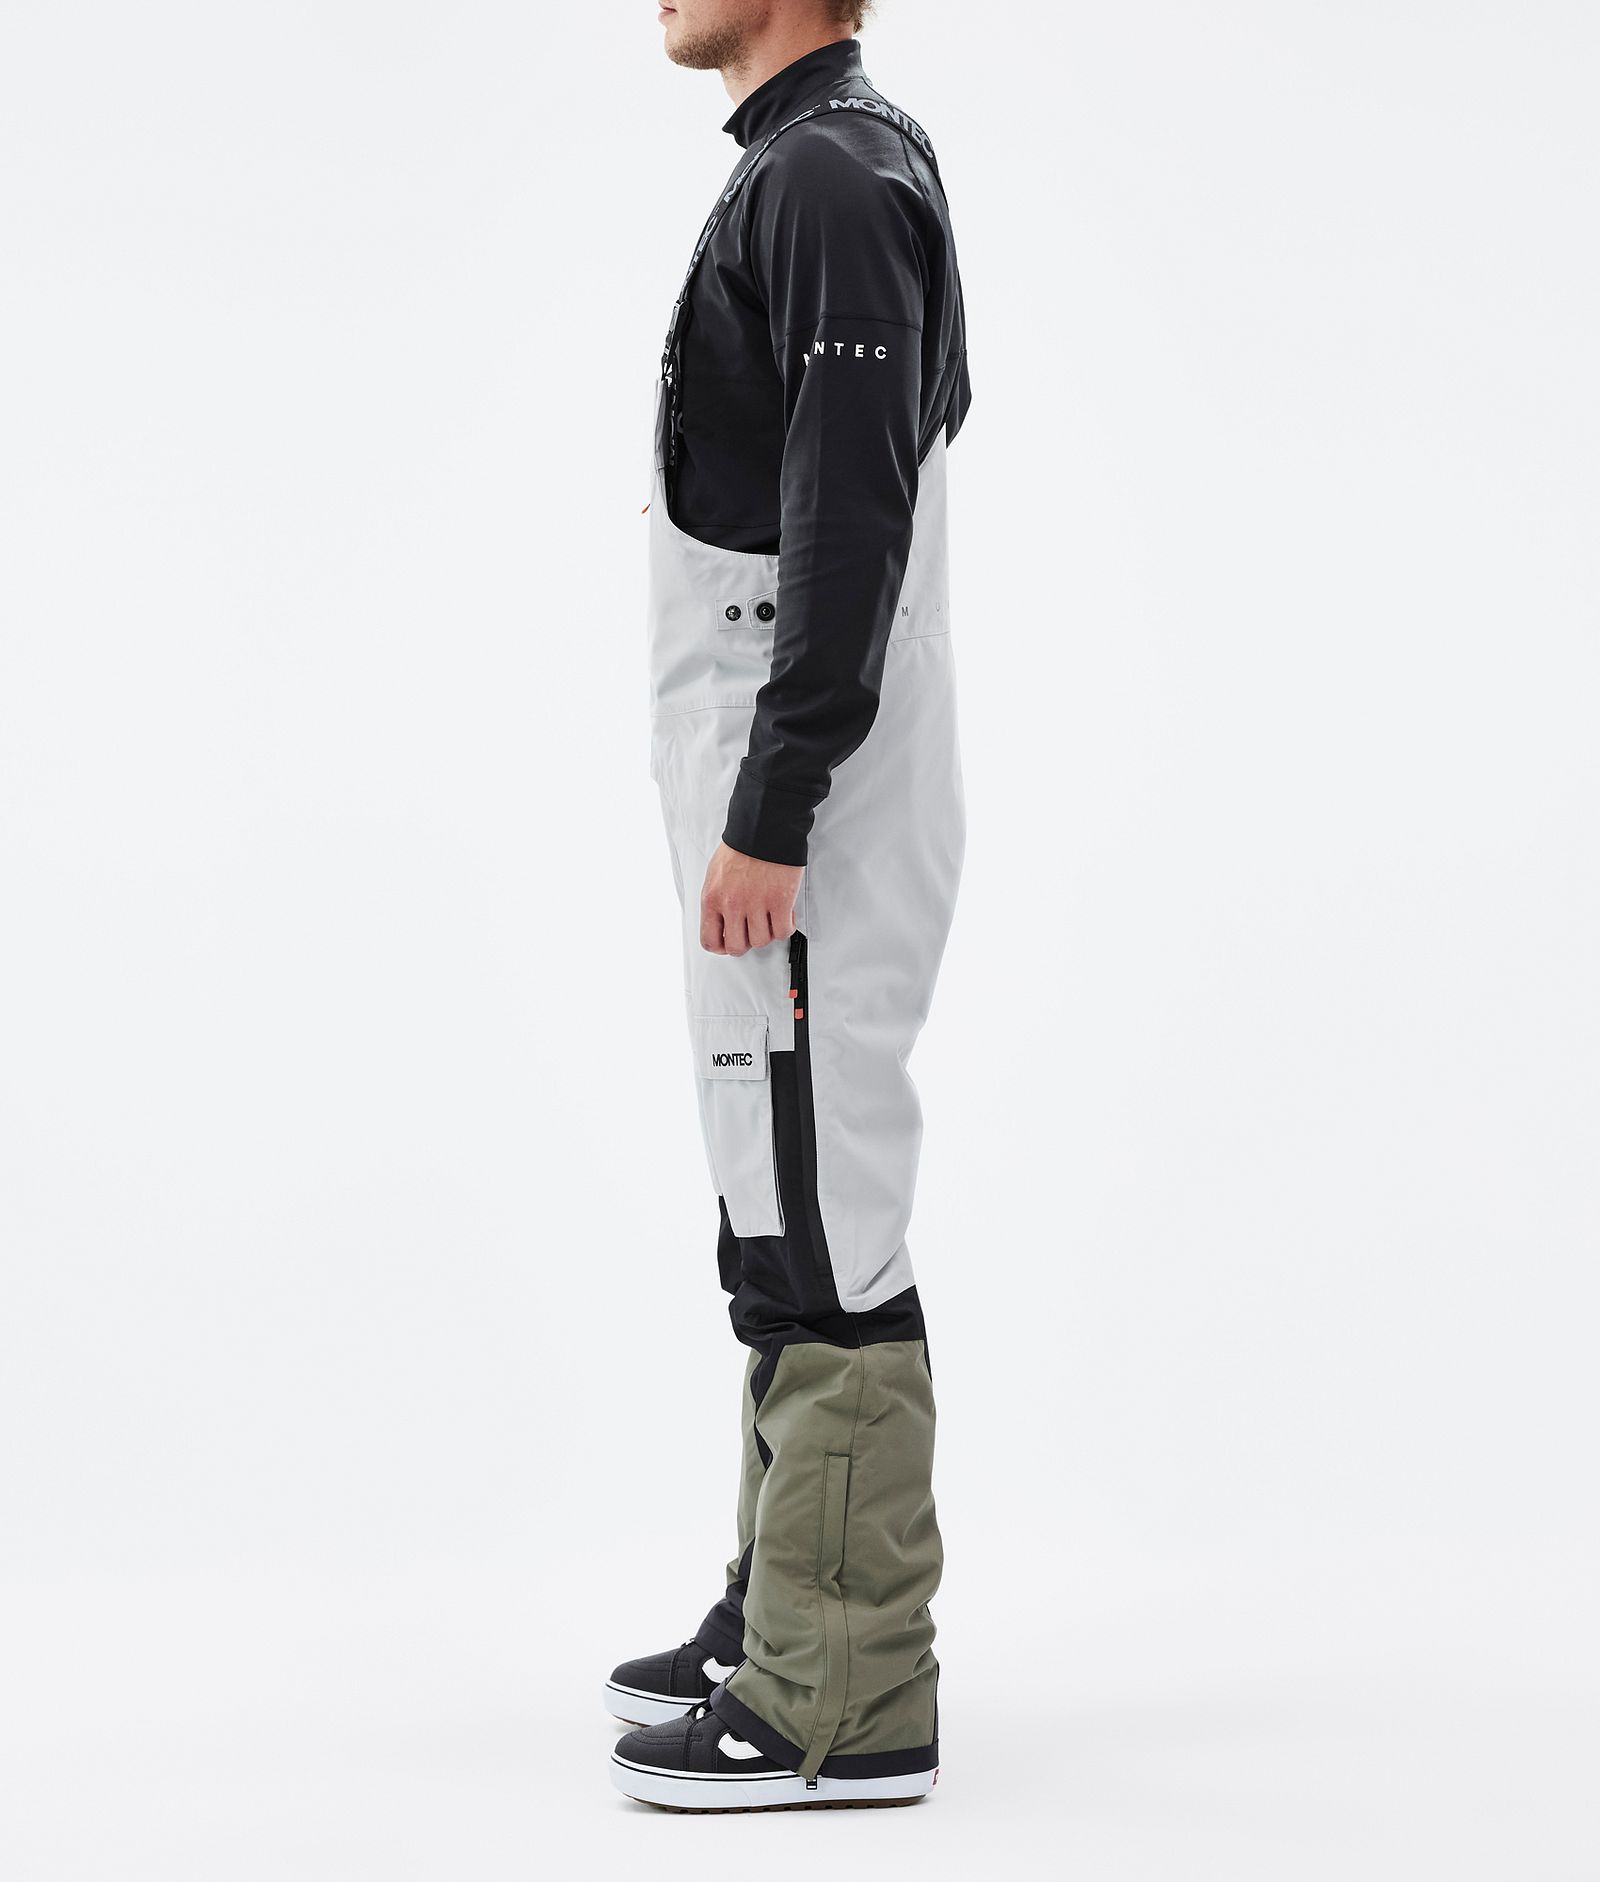 Fawk Pantalon de Snowboard Homme Light Grey/Black/Greenish, Image 2 sur 6